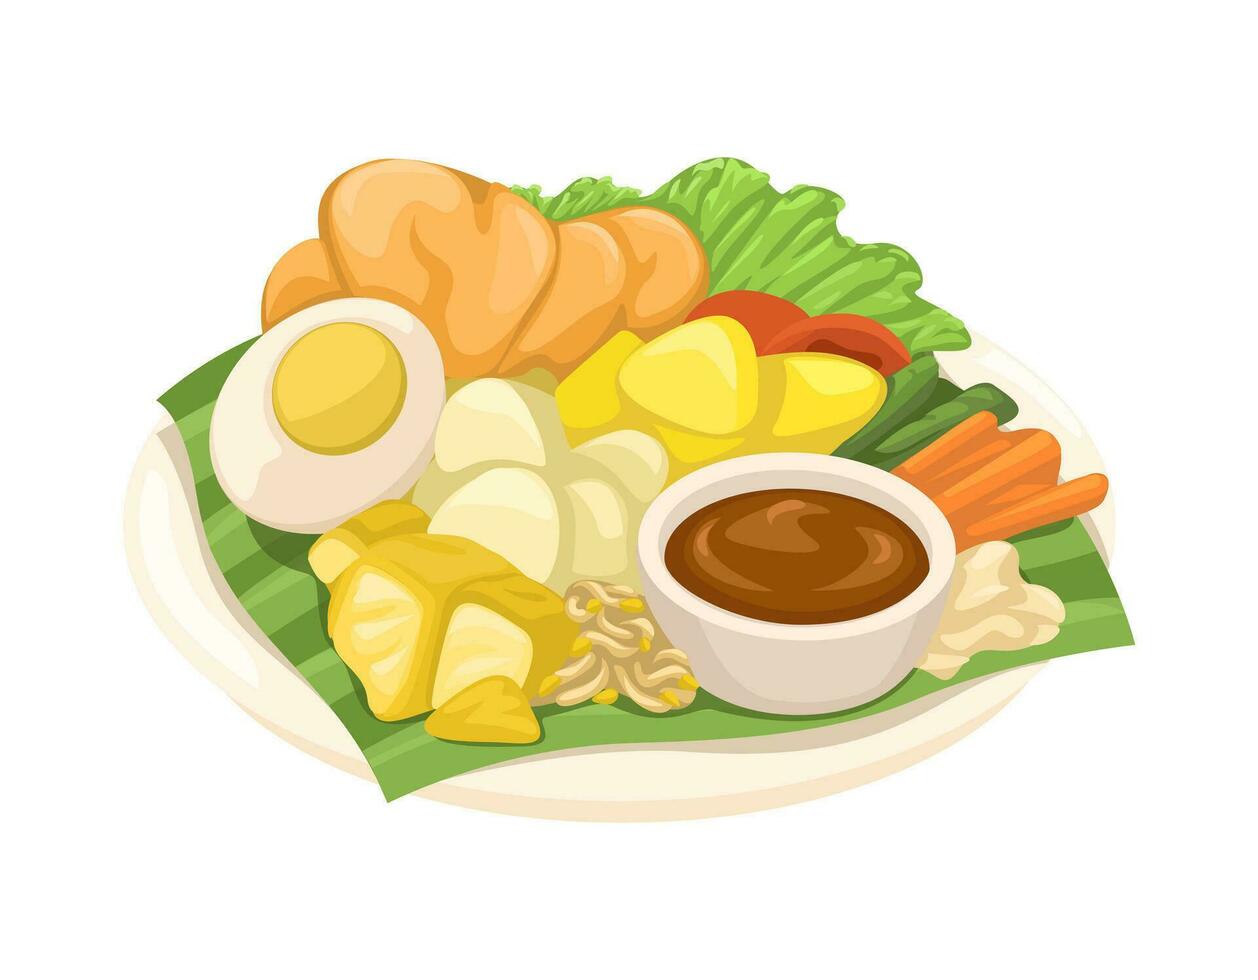 gado-gado indonésien salade asiatique rue nourriture illustration vecteur